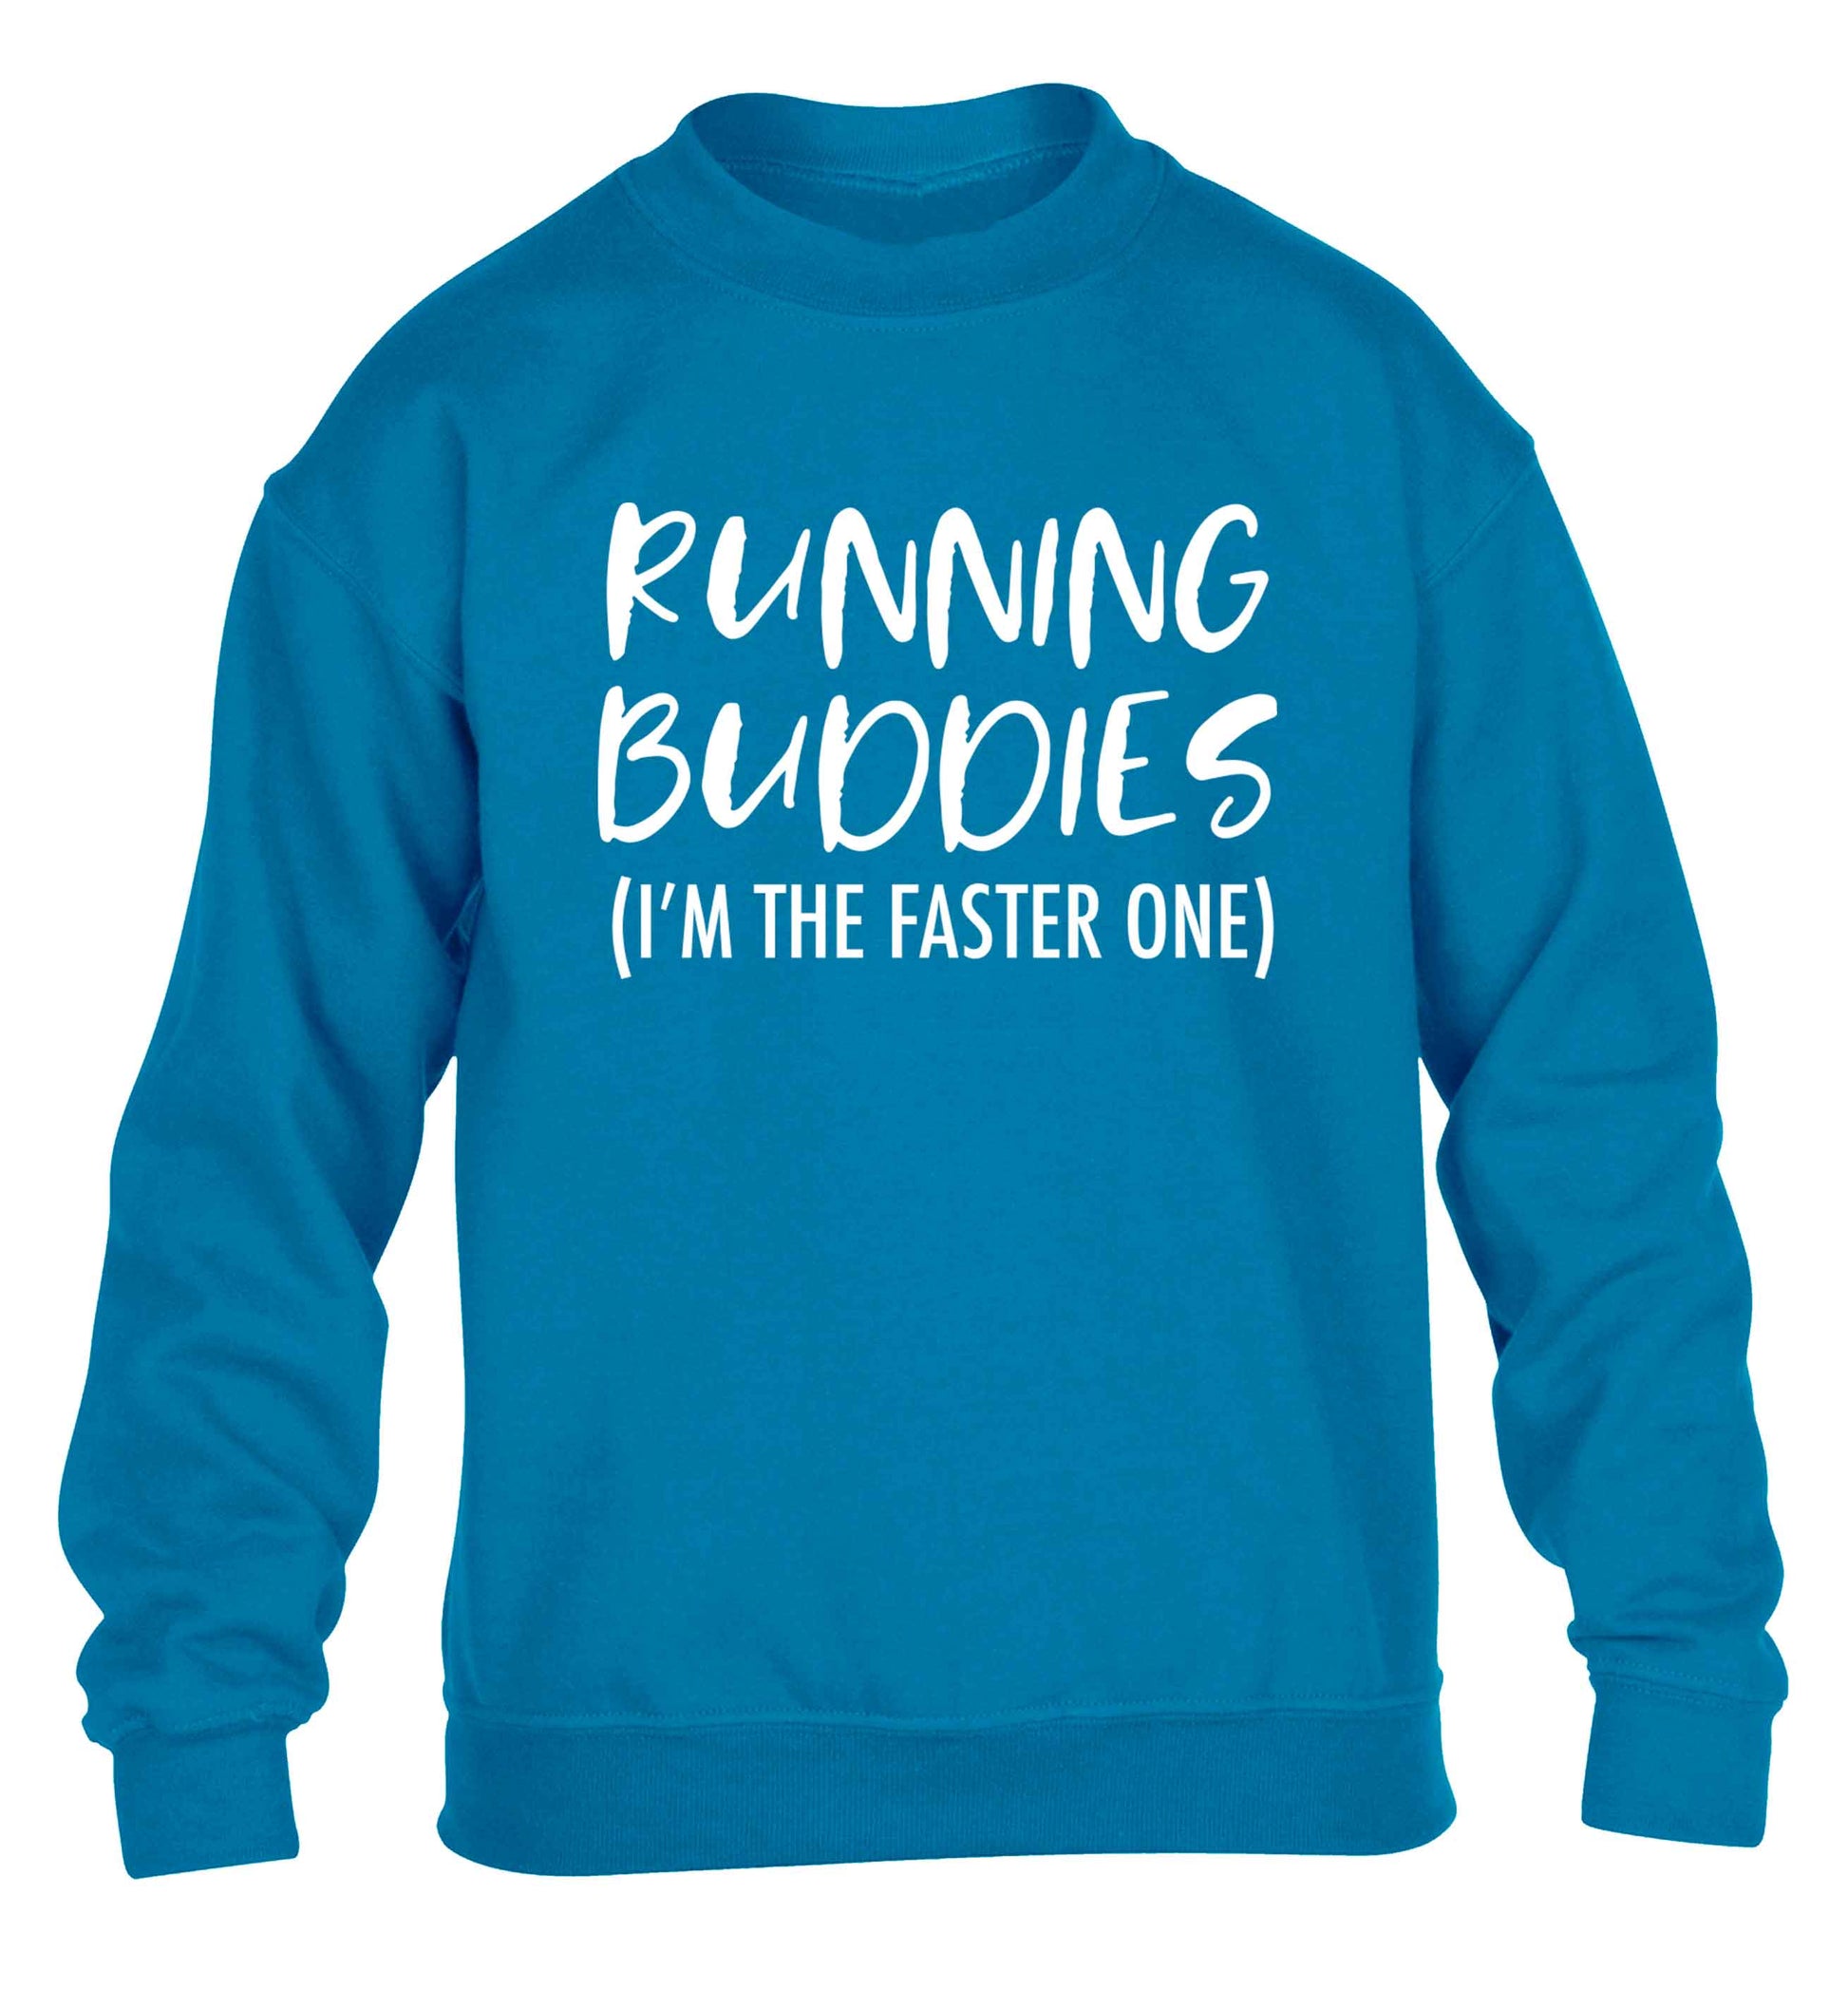 Running buddies (I'm the faster one) children's blue sweater 12-13 Years